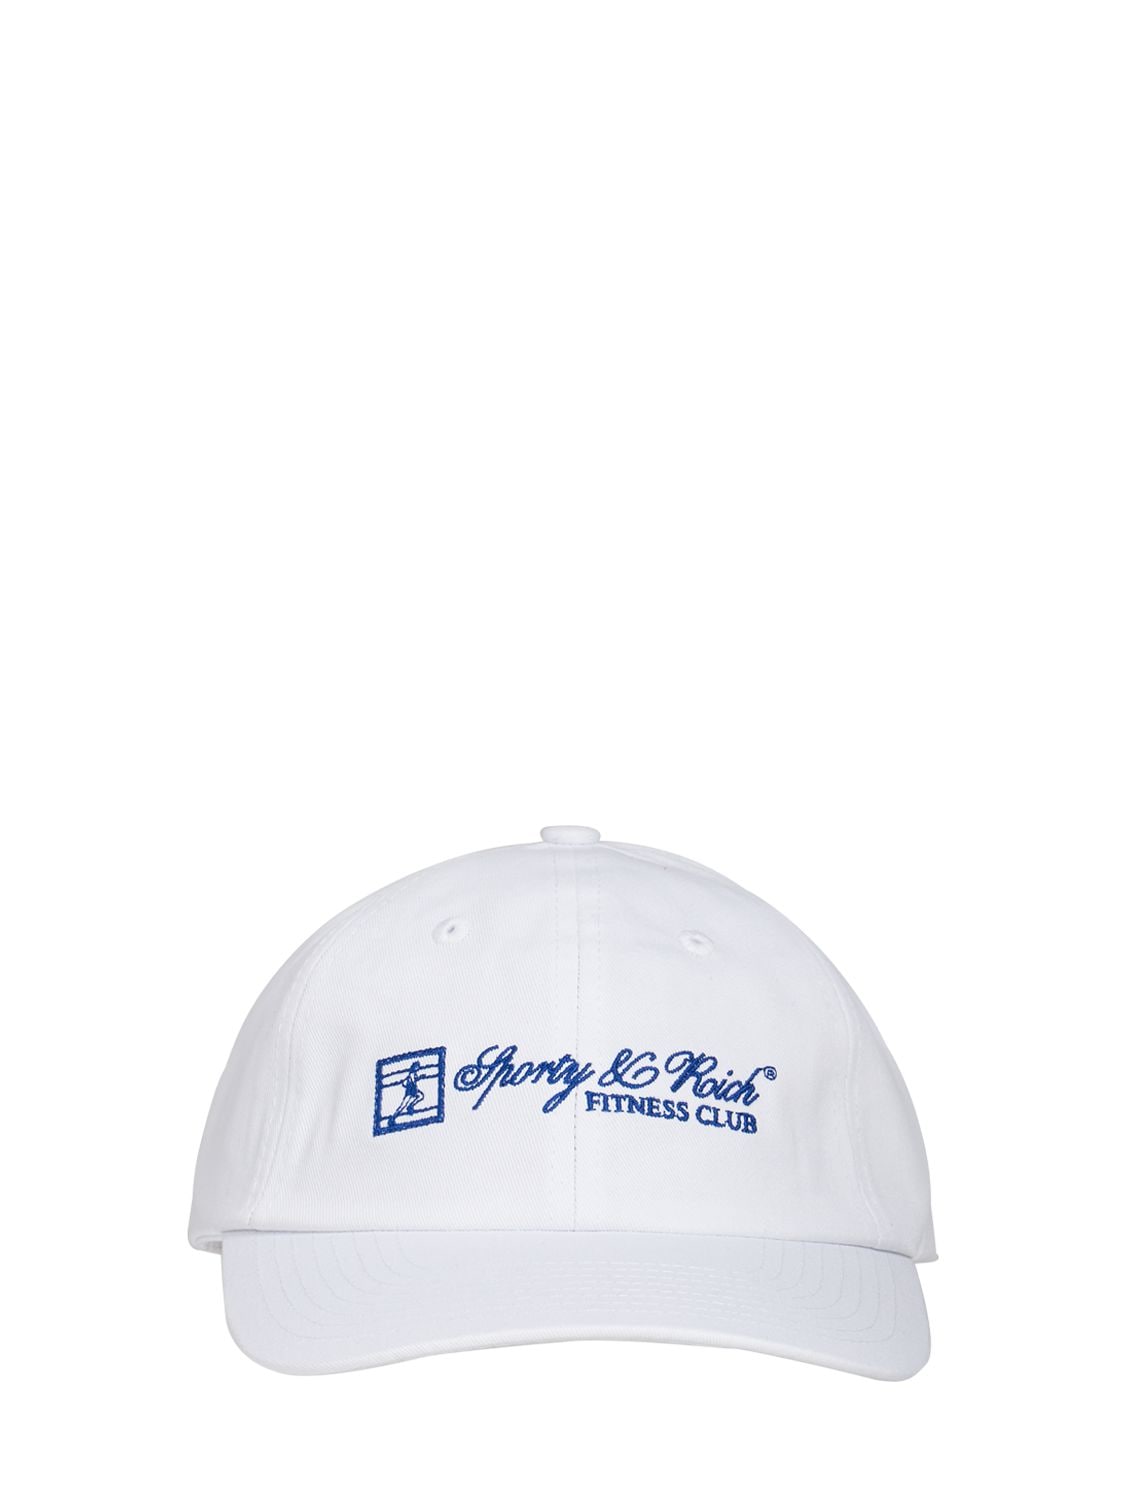 Fitness Club Baseball Hat